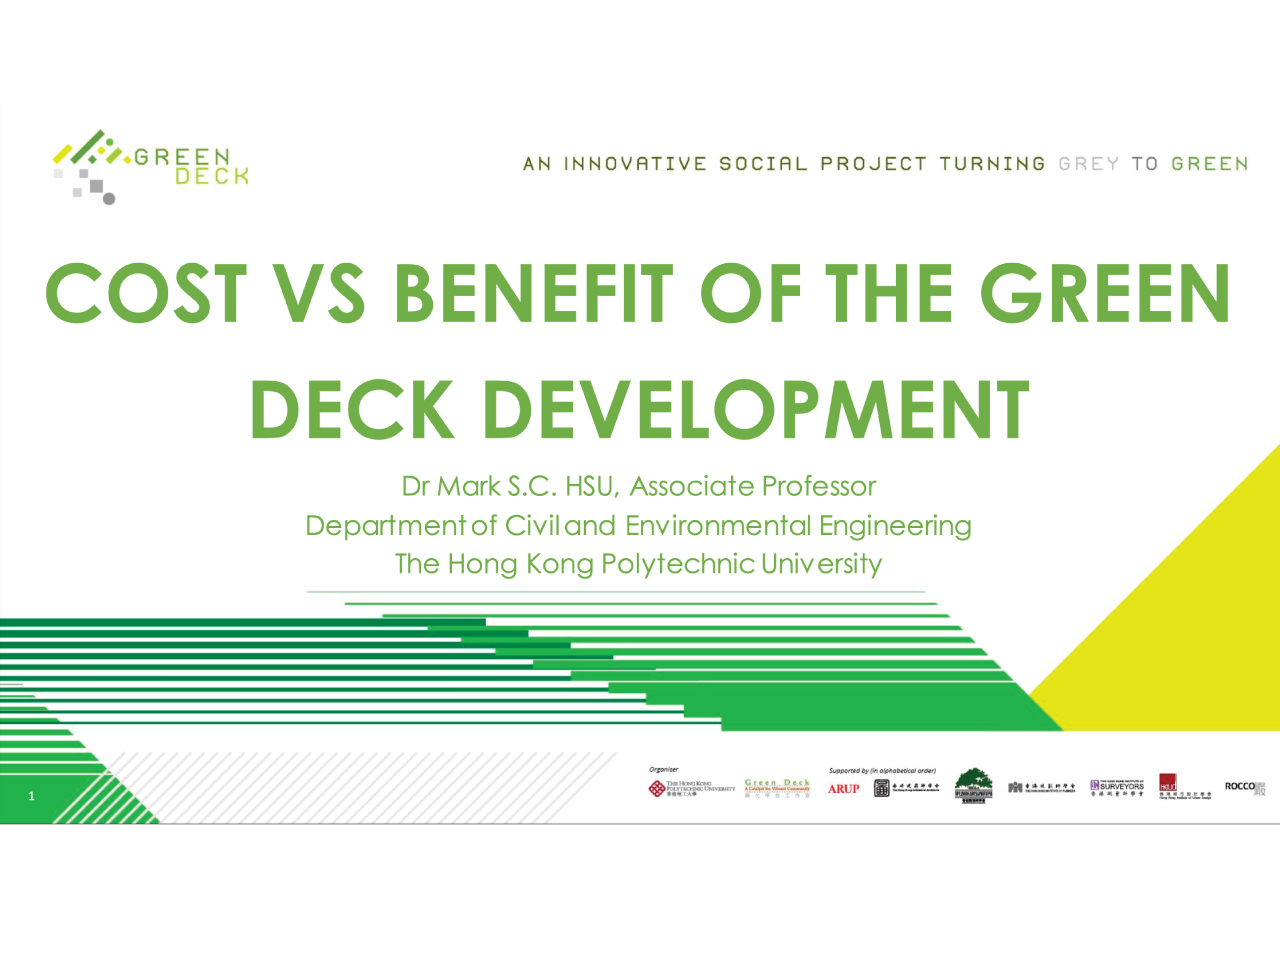 Cost-benefit analysis of the Green Deck development